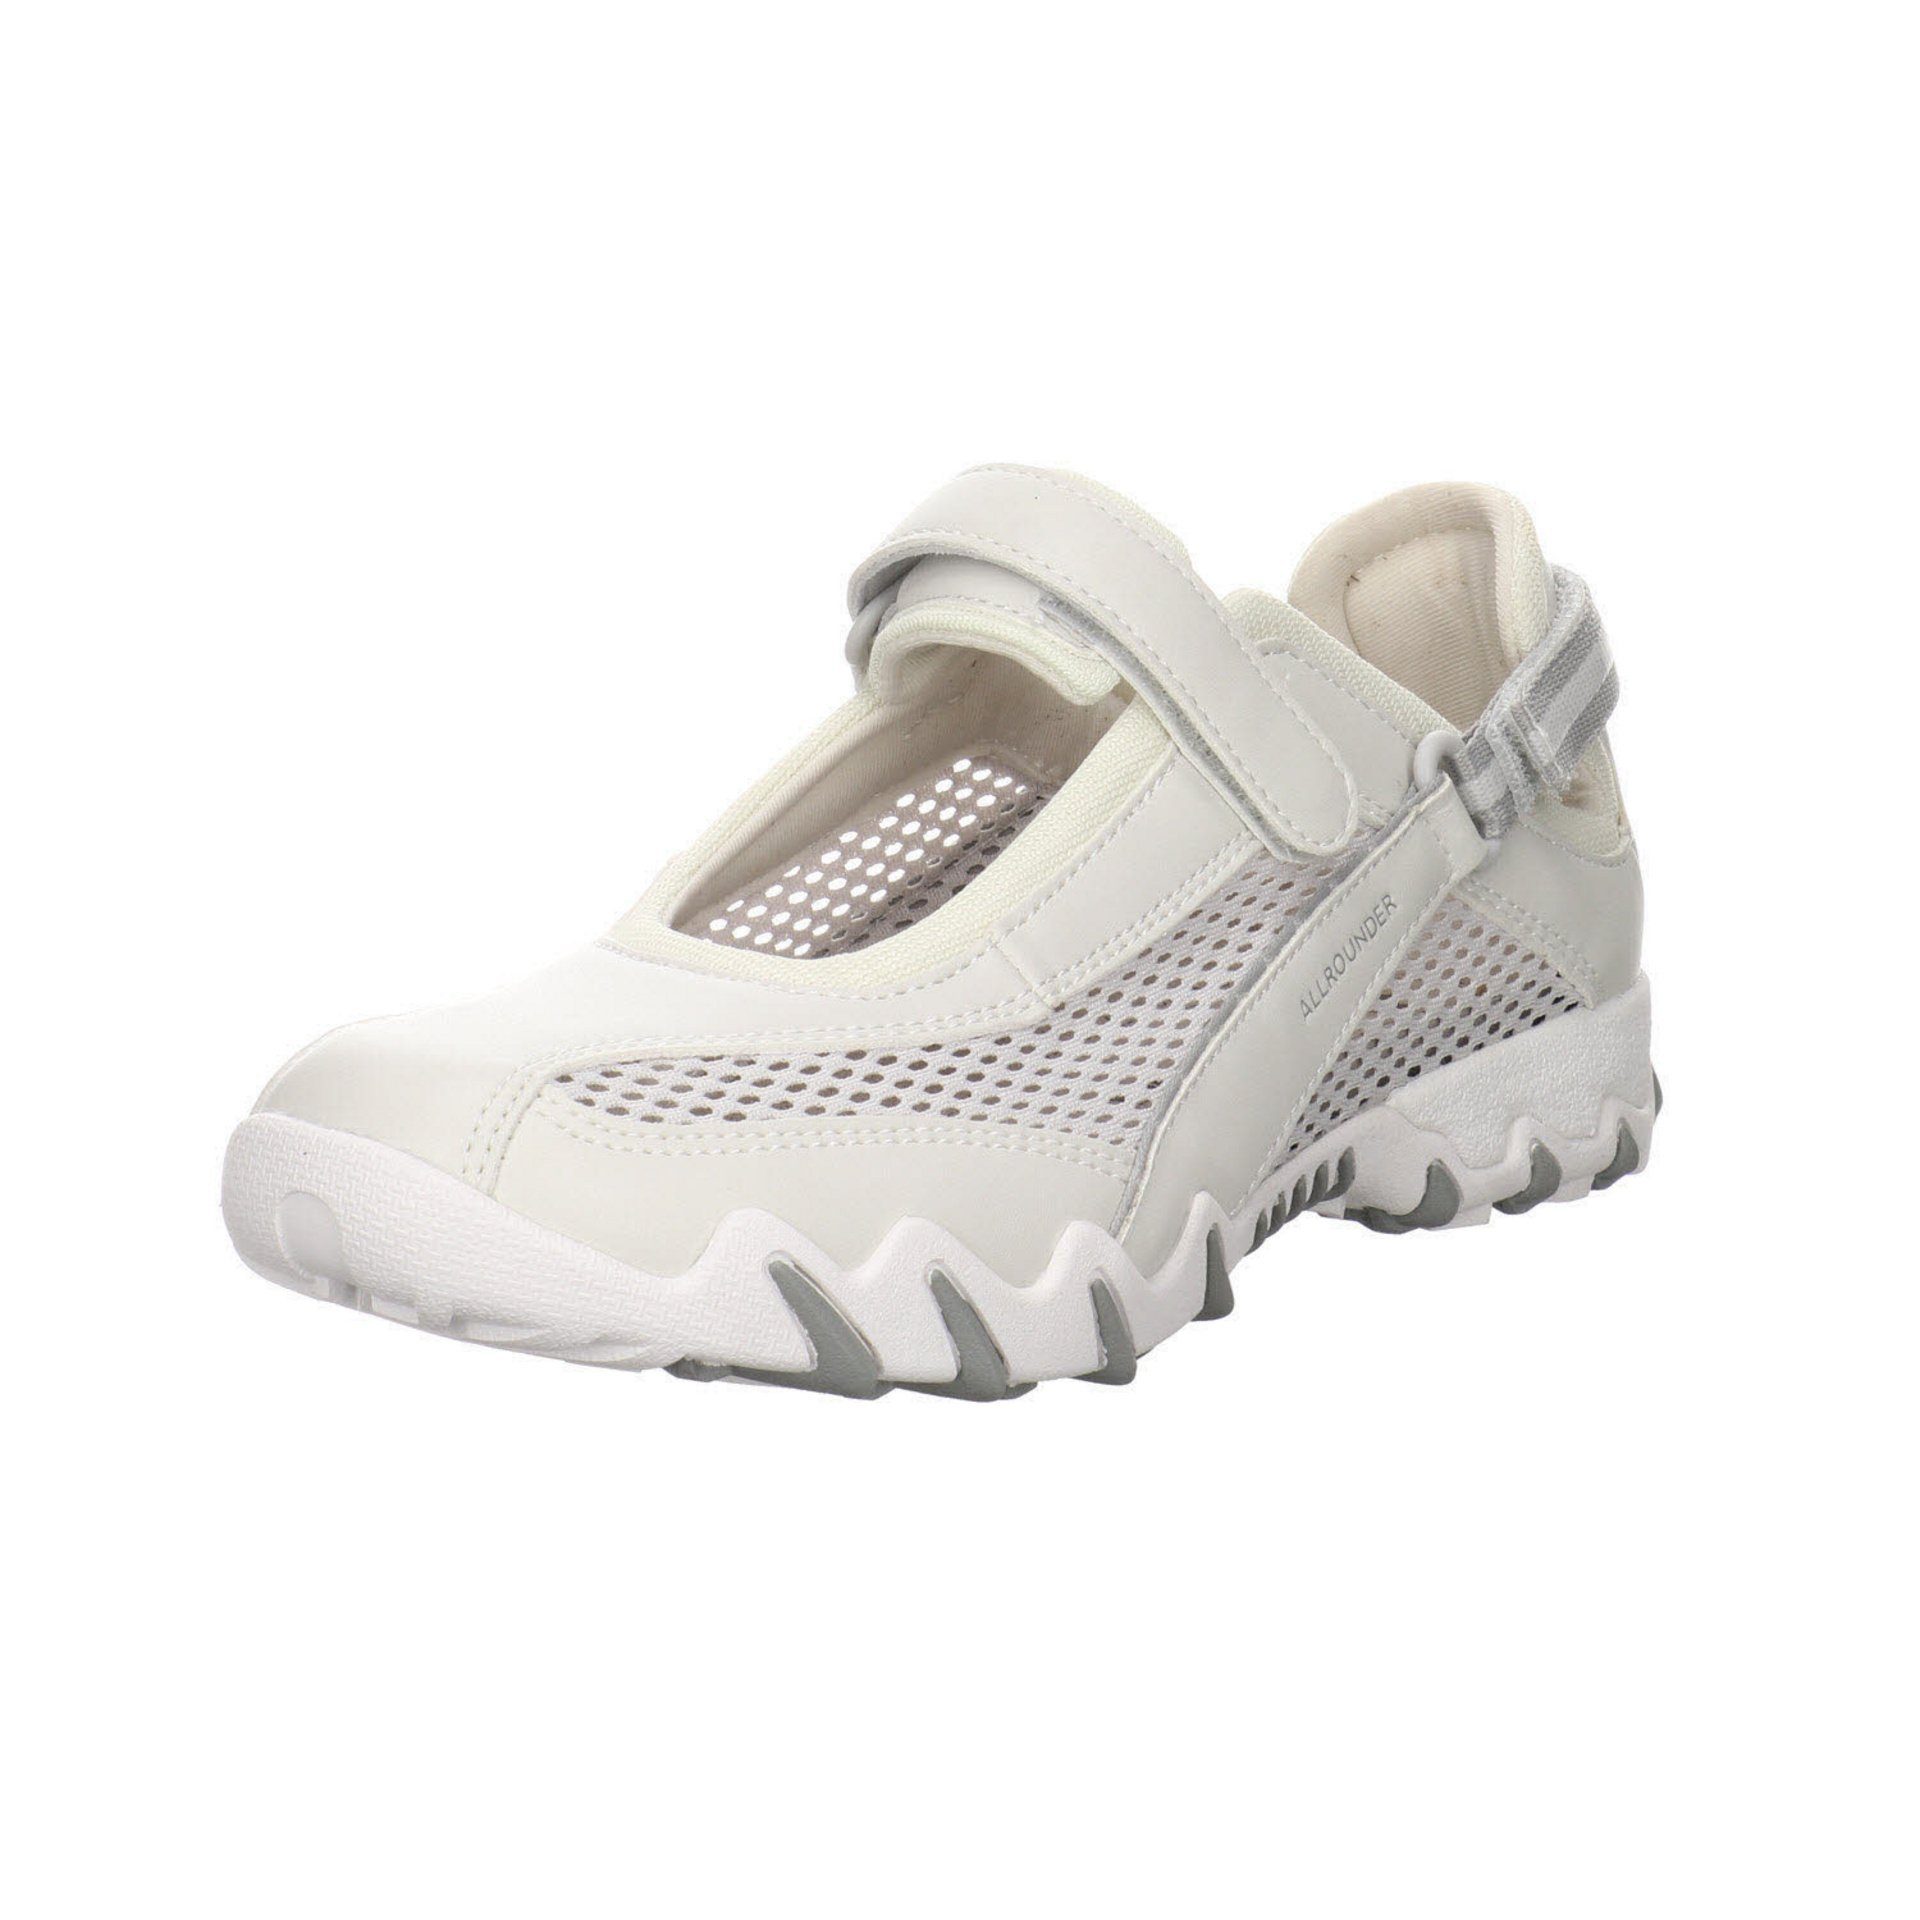 Mephisto Allrounder Damen Schuhe CLOU Outdoorschuh Outdoor Niro Leder-/Textilkombination OFFWHITE/NIMBUS Outdoorschuh